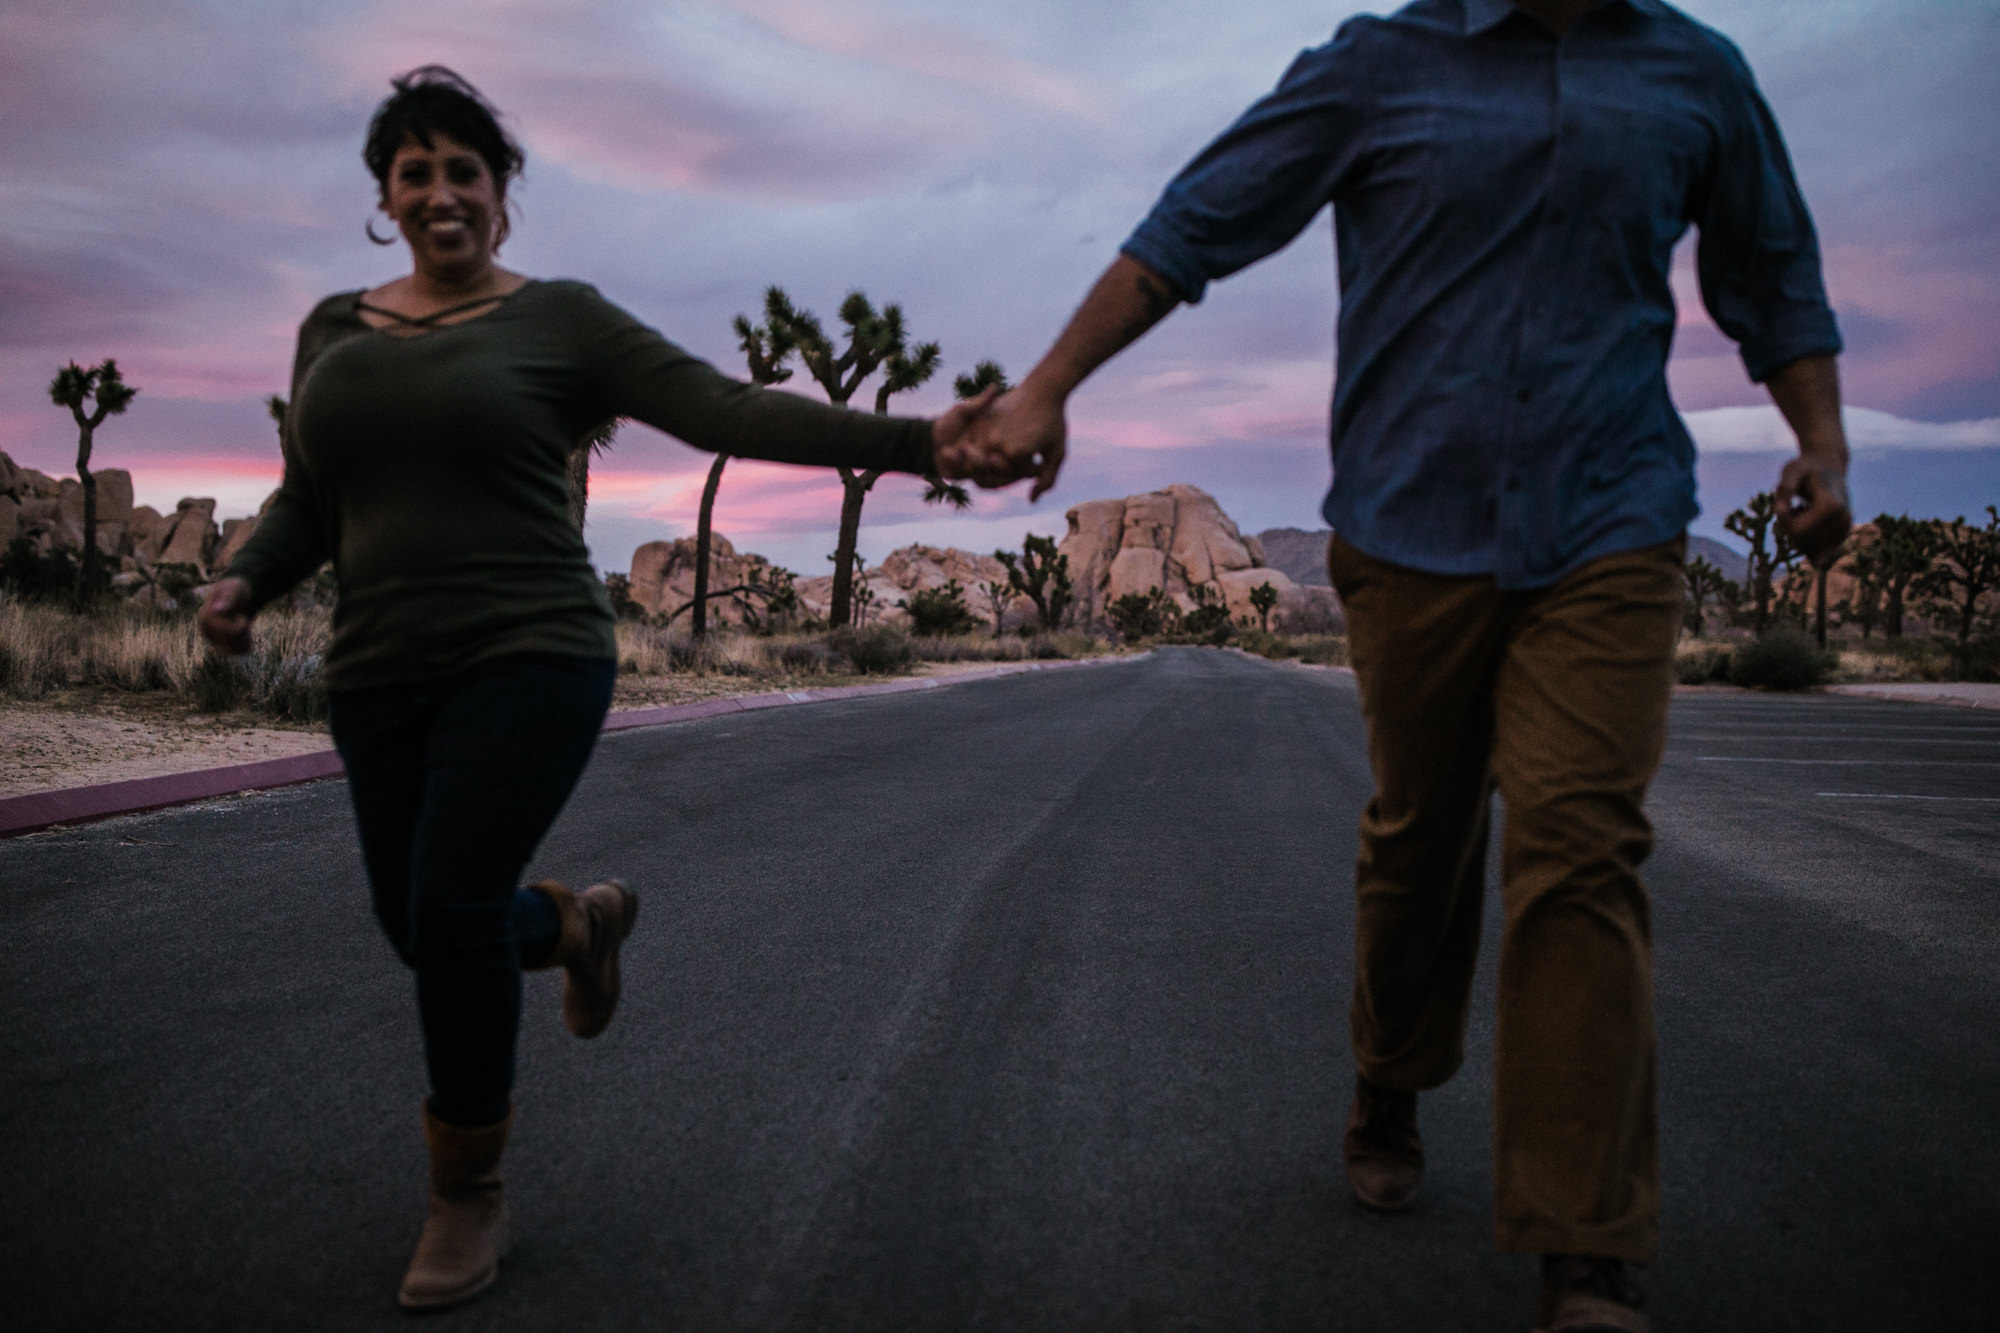 tamara + jerry's joshua tree national park engagement session | desert elopement inspiration | the hearnes adventure wedding photography | www.thehearnes.com